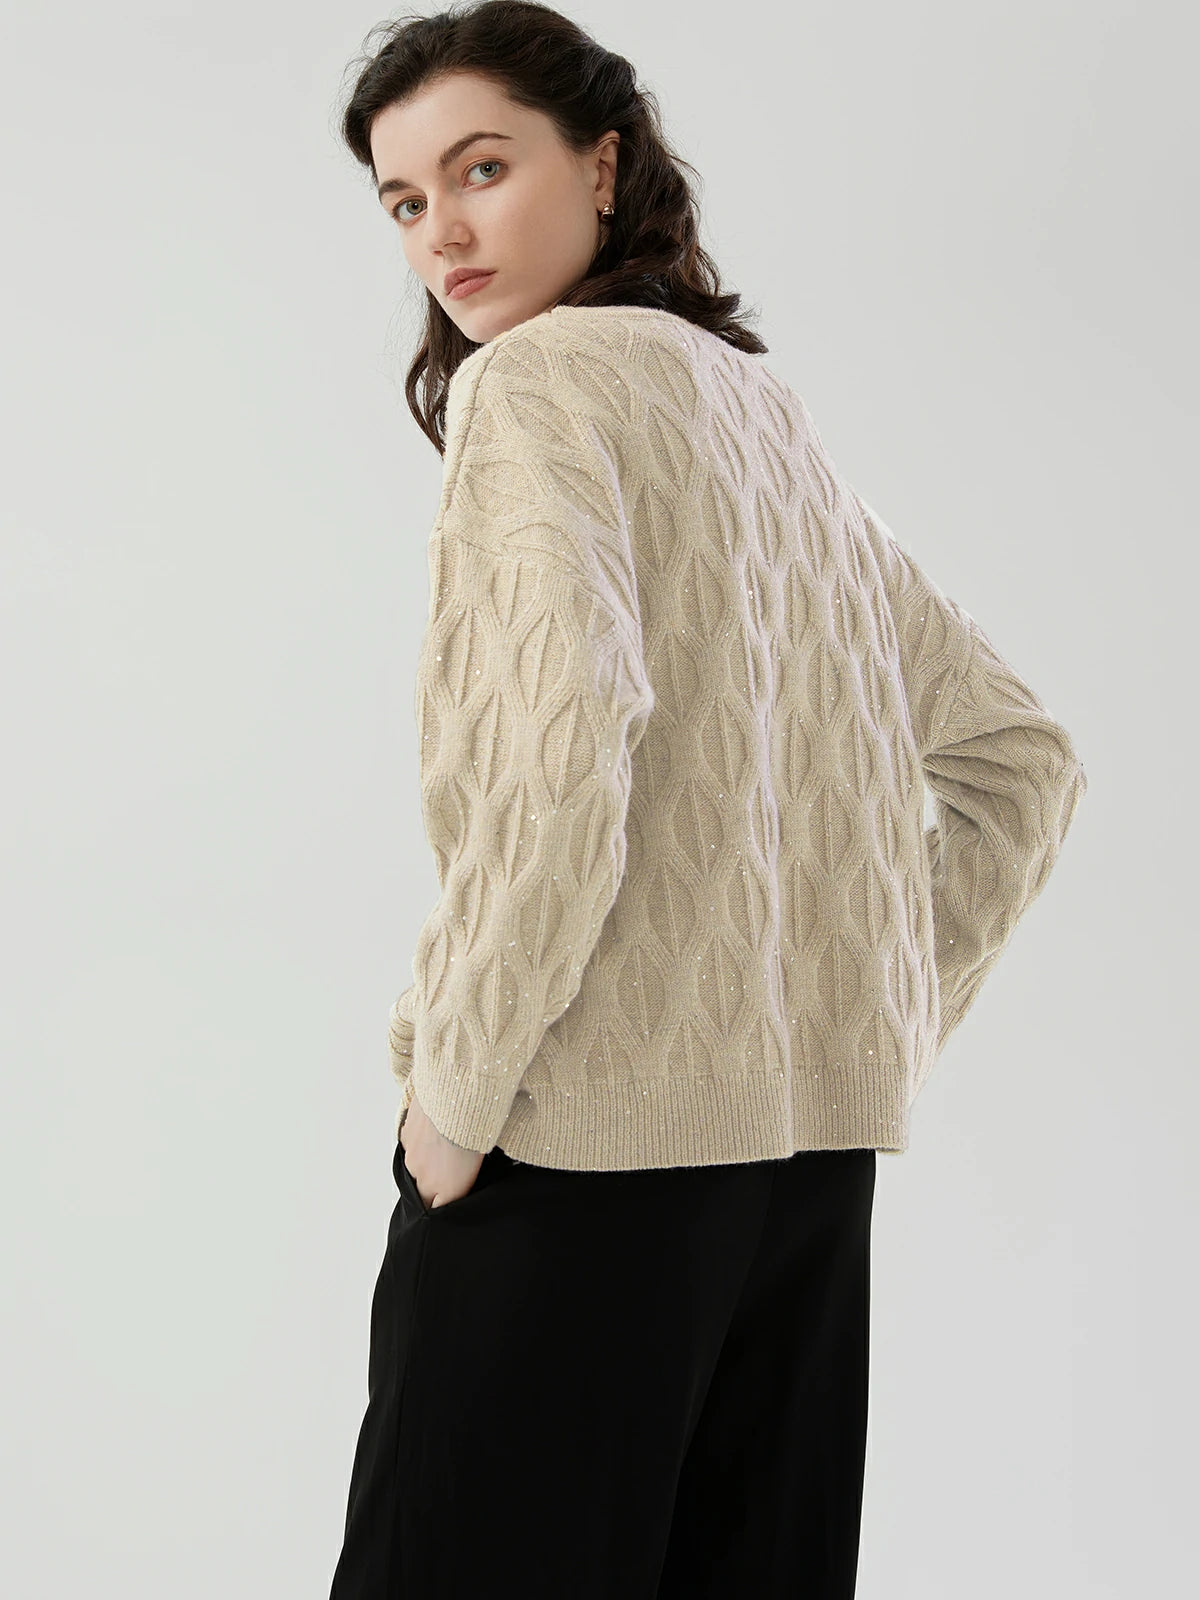 Winter style of a stylish women&#39;s round-neck sweater